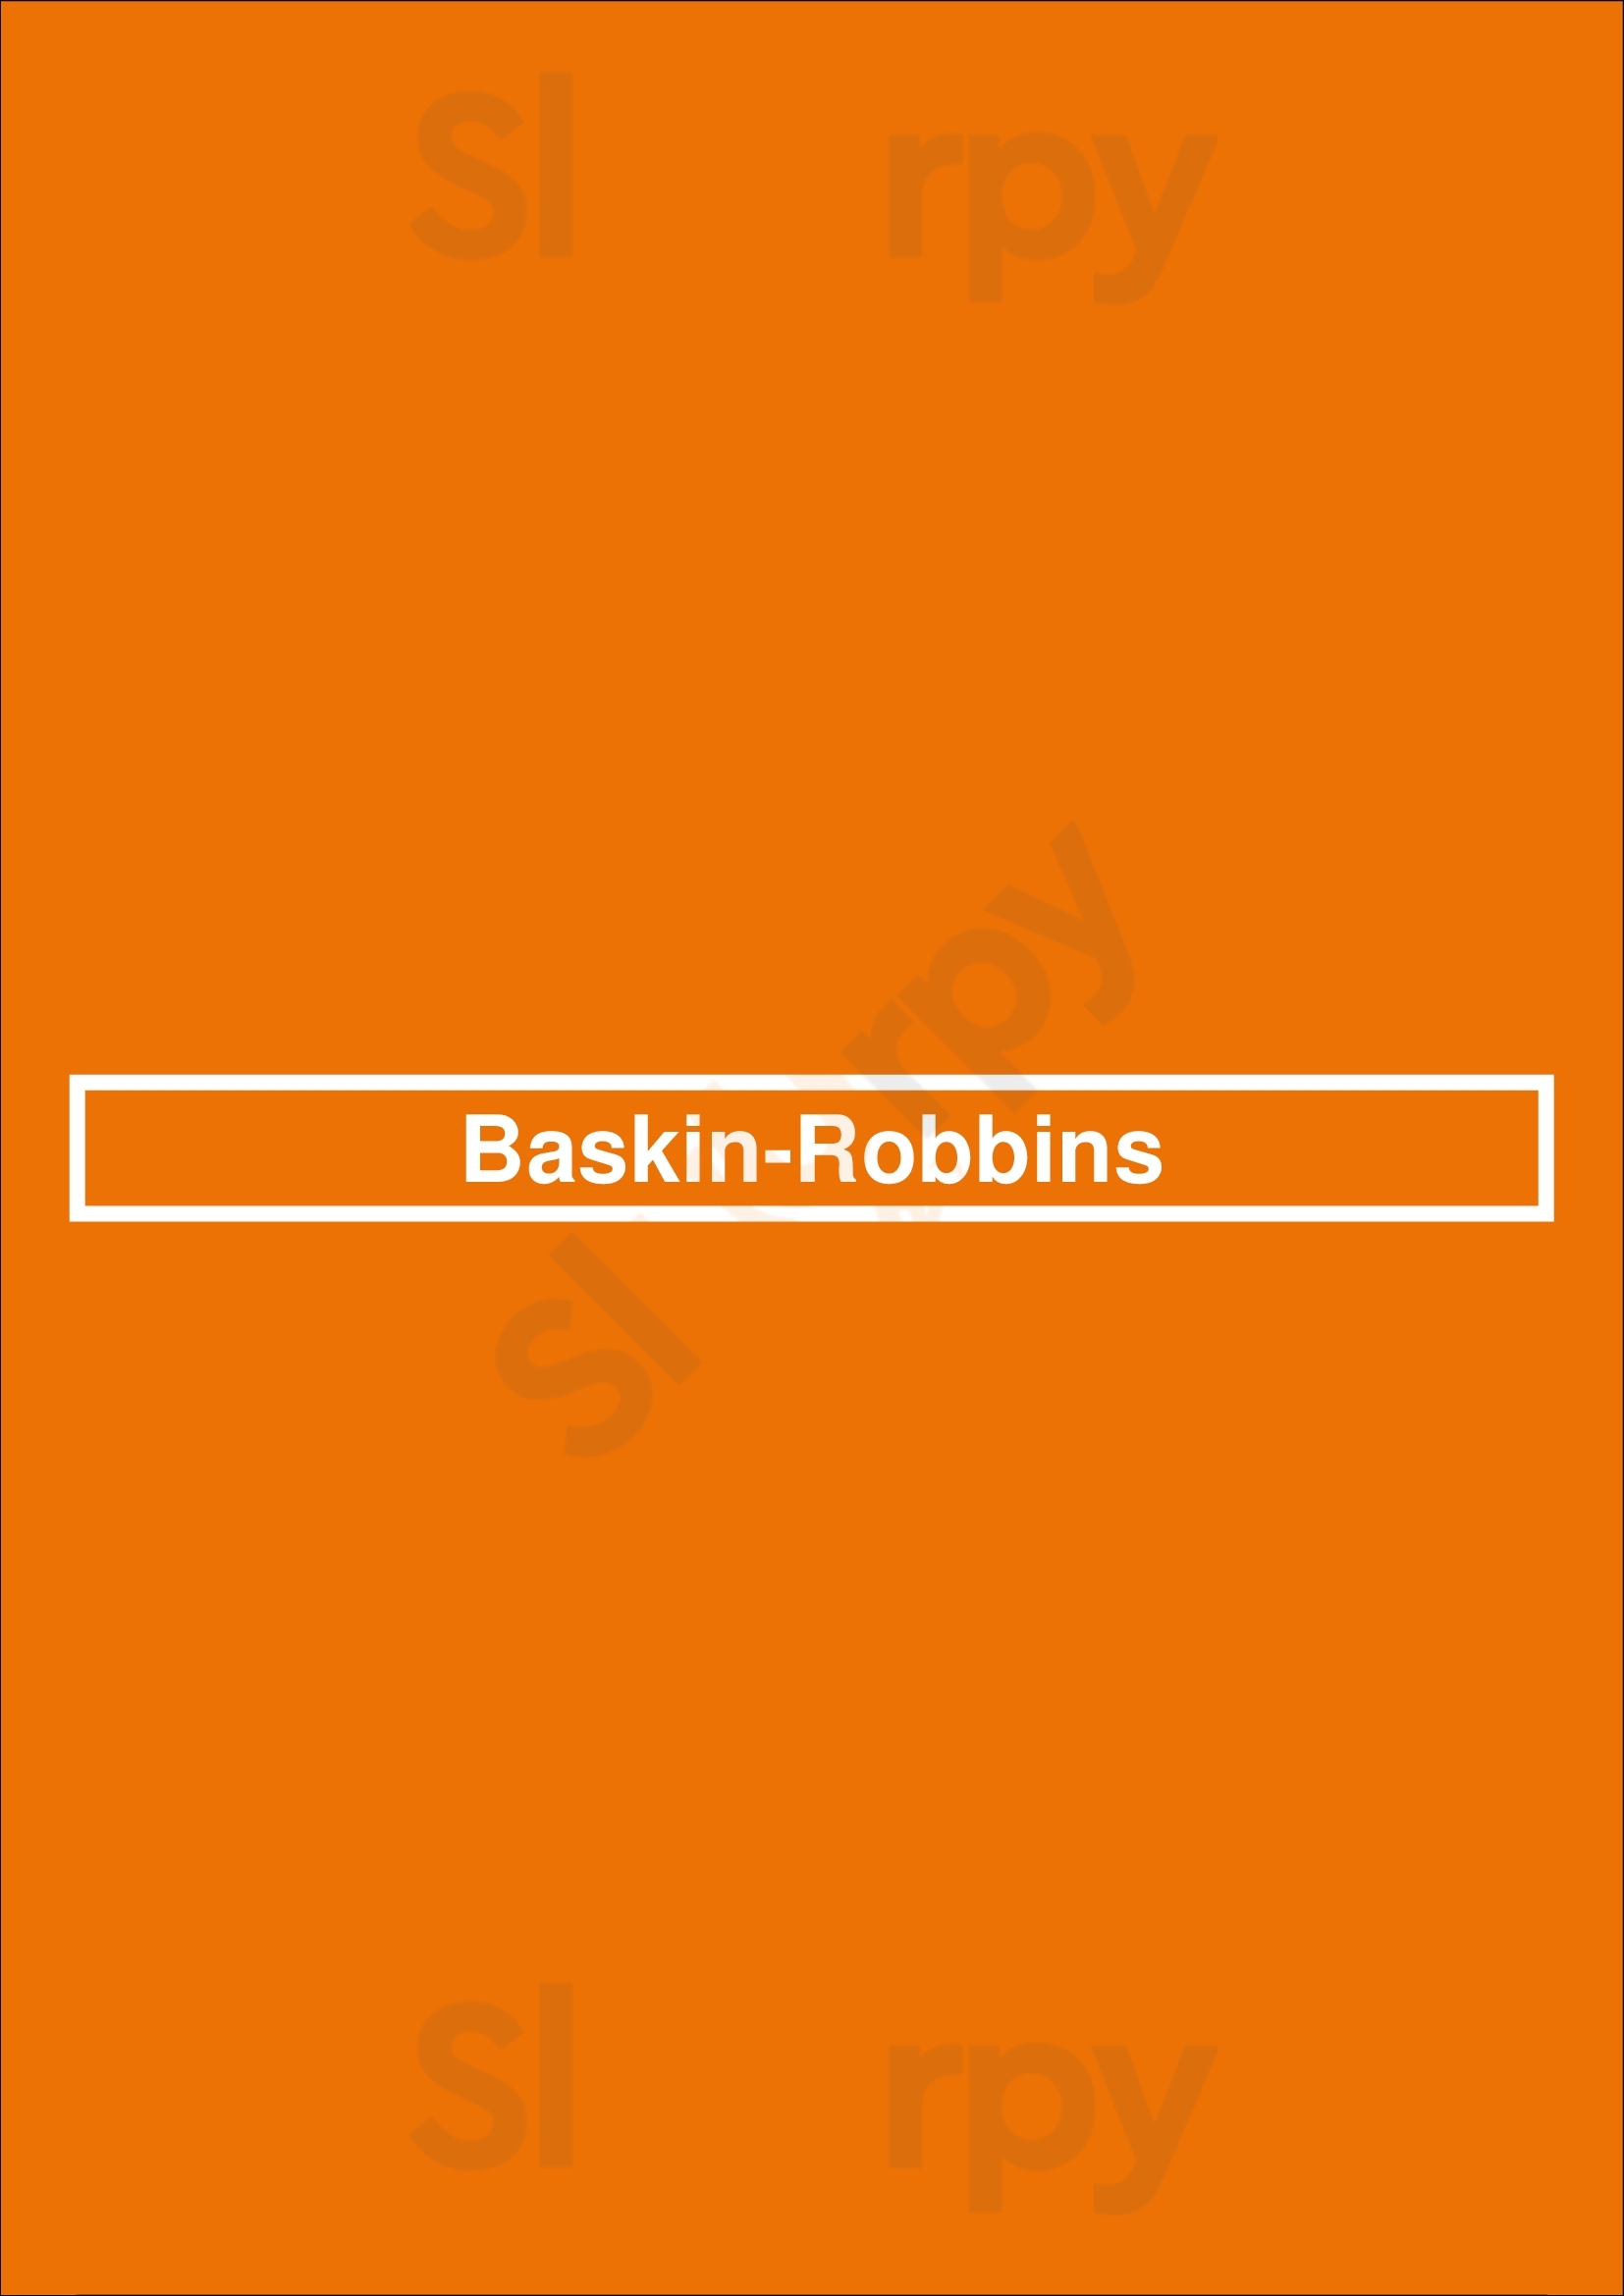 Baskin-robbins London Menu - 1